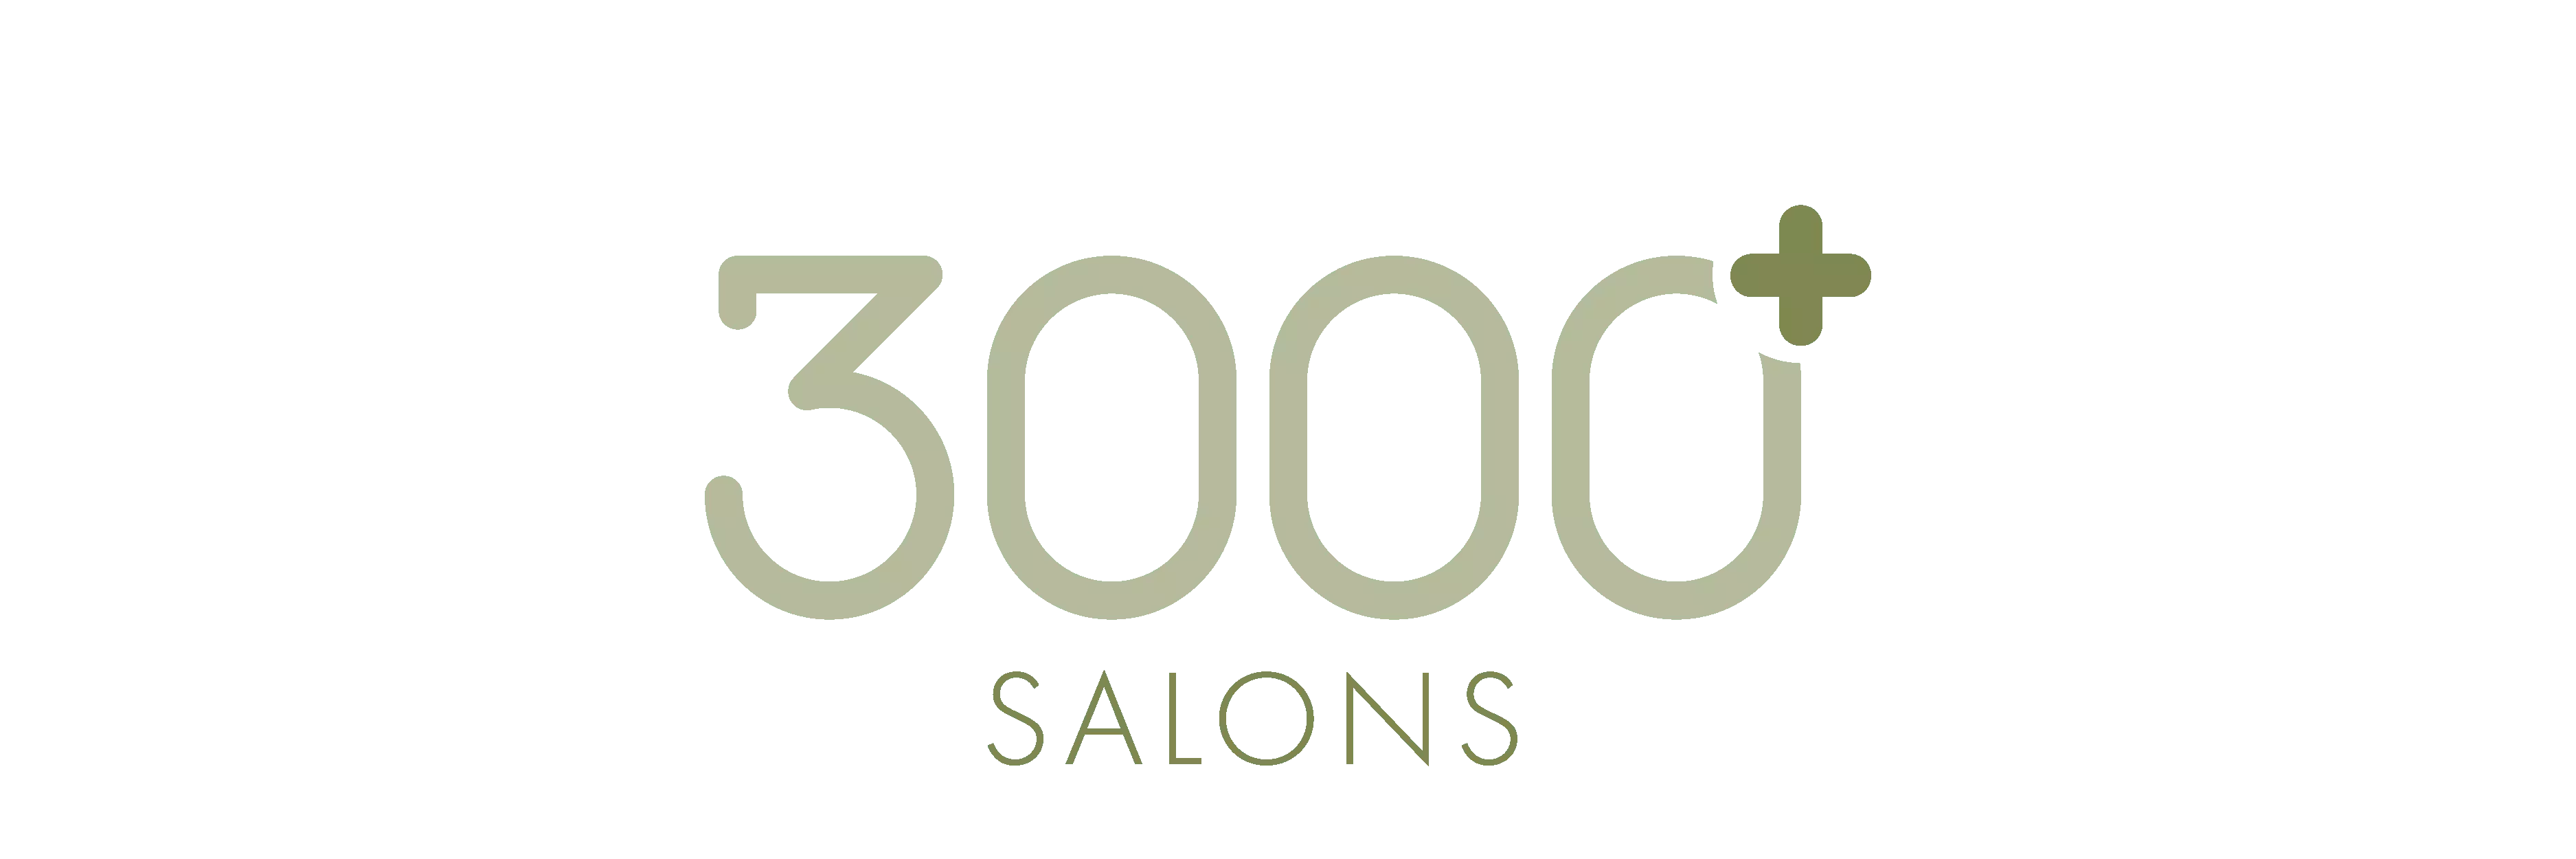 logo-3000-salons